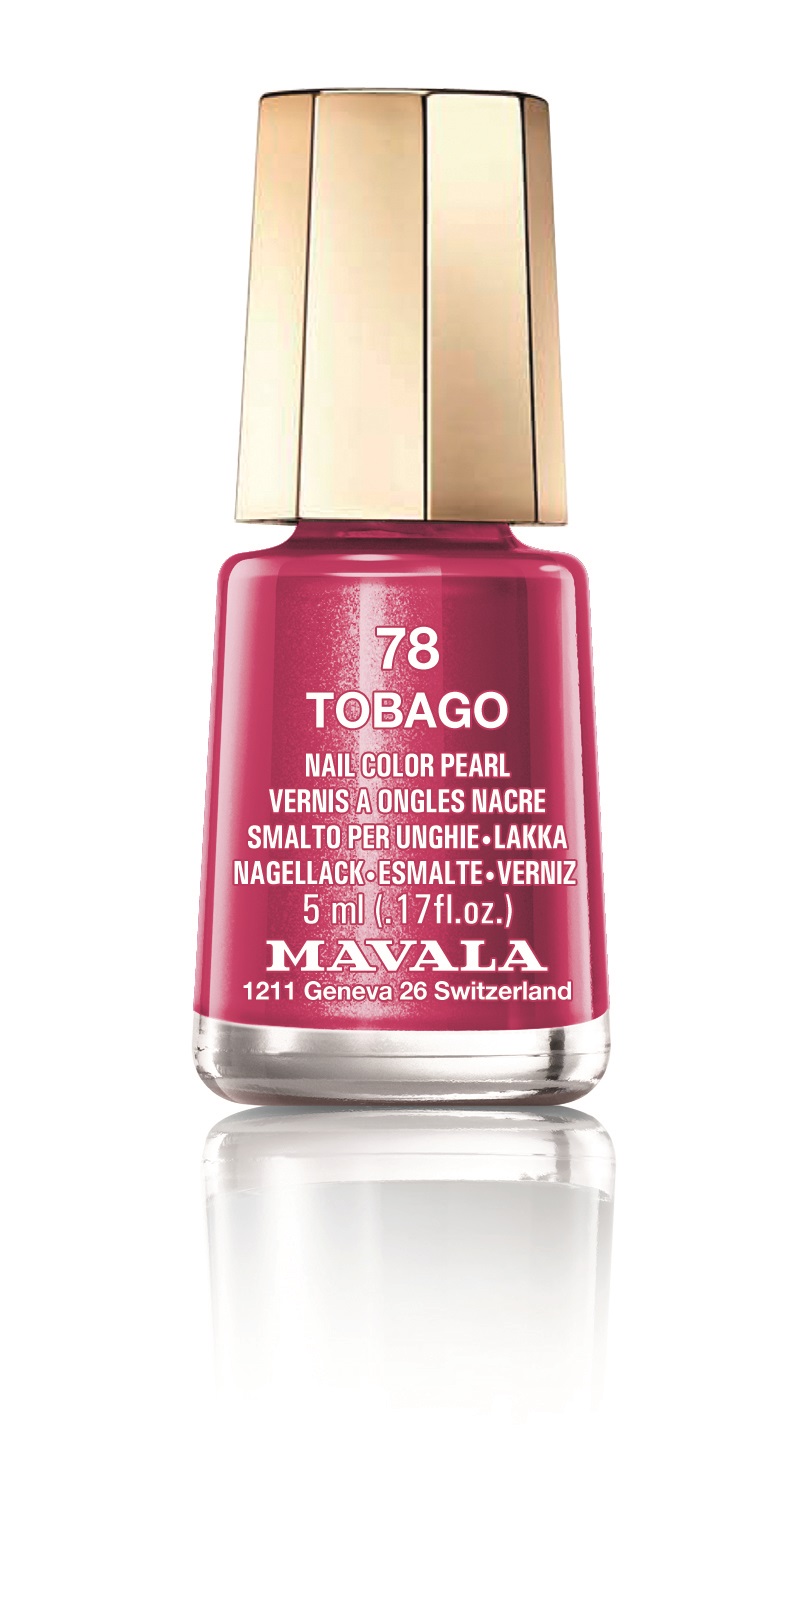 MAVALA Mini Color Nagellack 5 ml - Tobago (78)